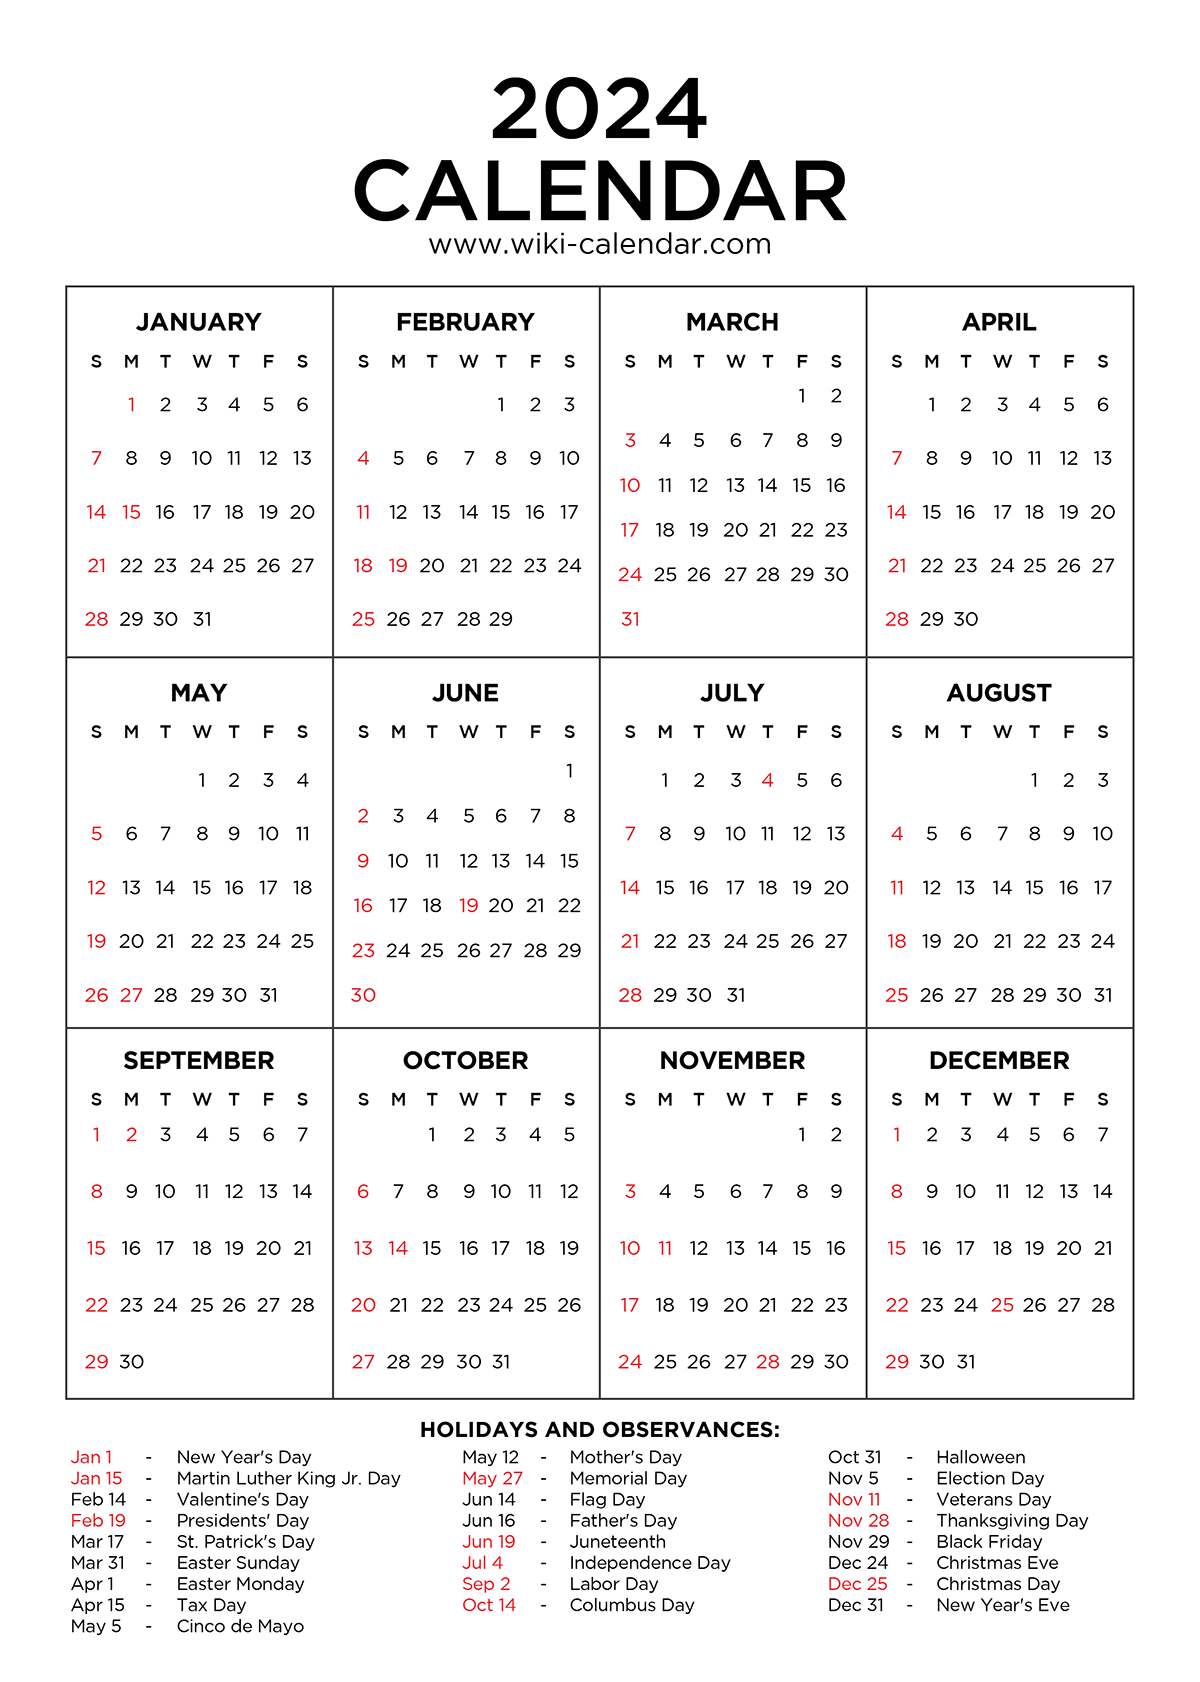 Year 2024 Calendar Printable With Holidays - Wiki Calendar | Printable 2024 Calendar By Year